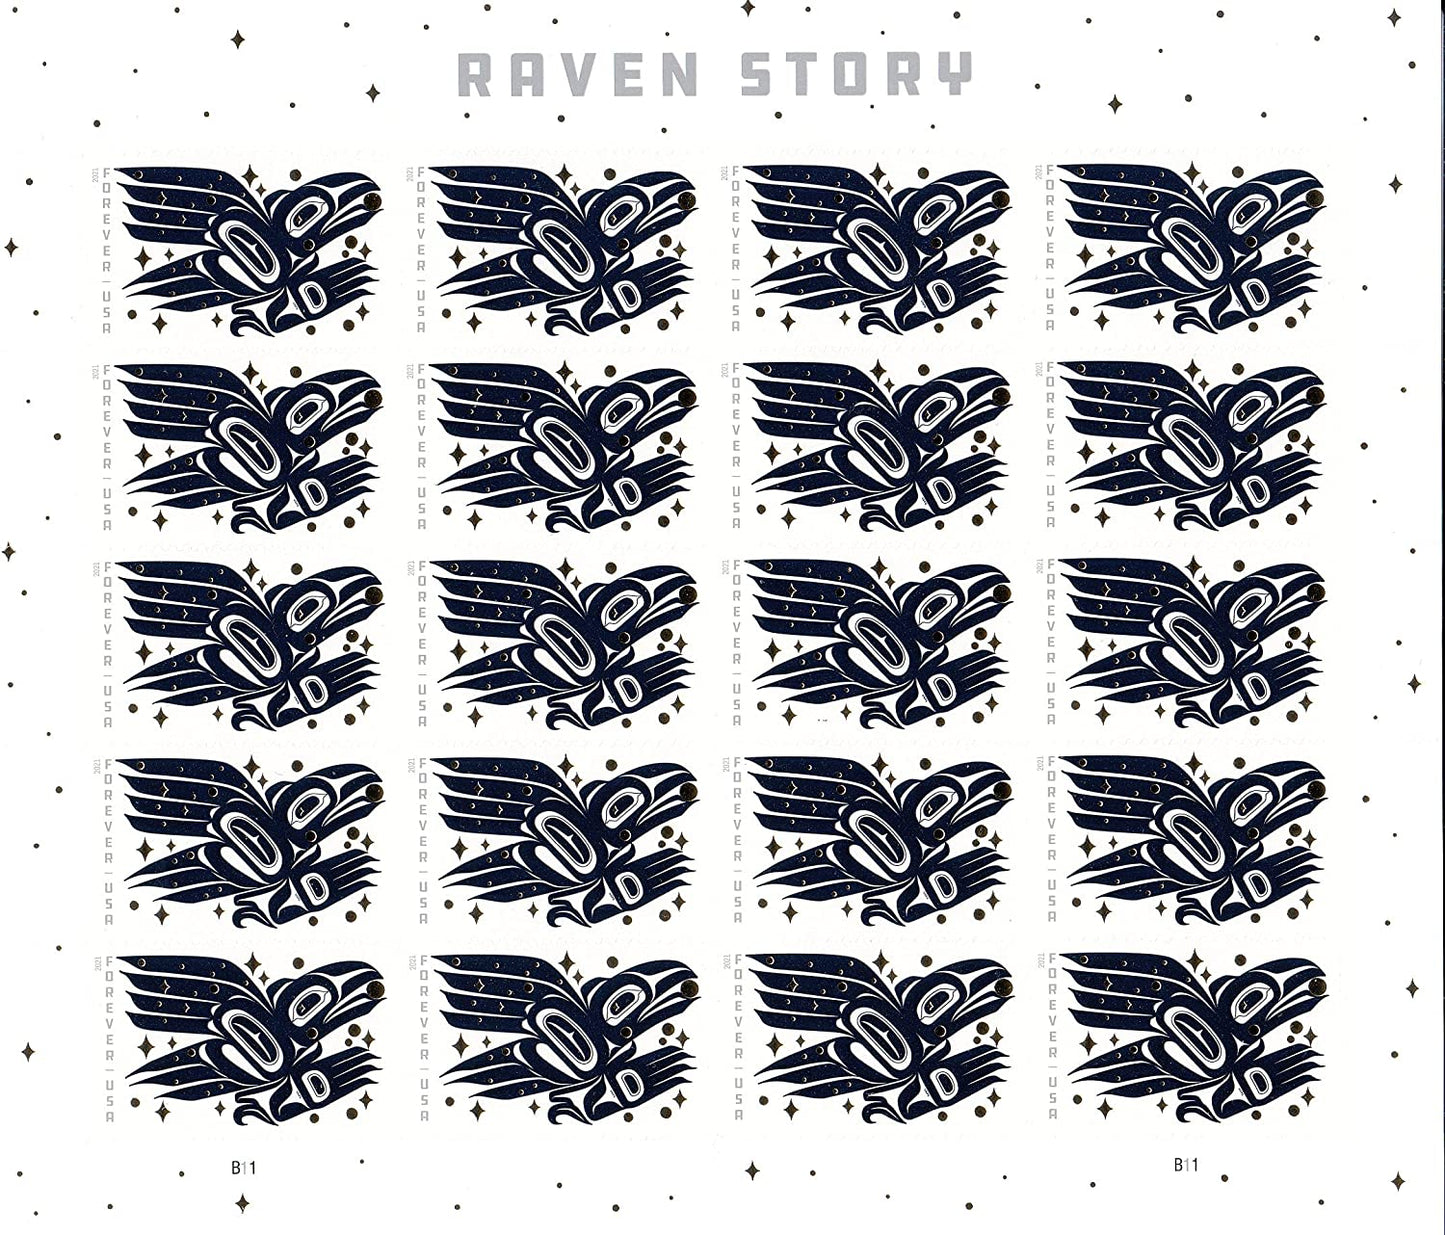 (2021) USPS Raven Story Forever Postage Stamps